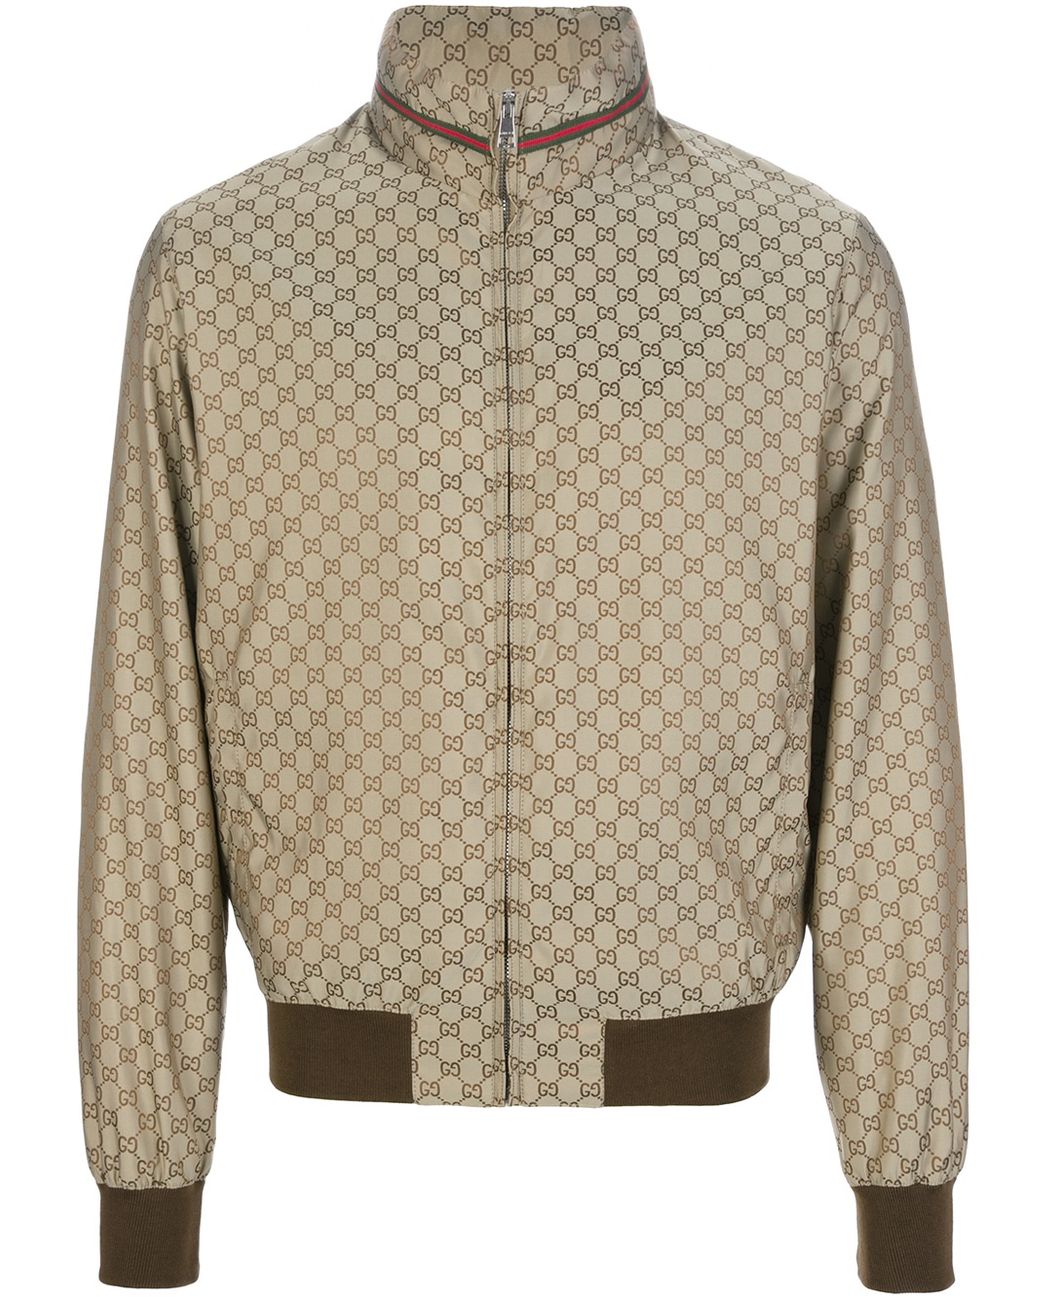 Gucci Print Bomber Jacket in Metallic for Men | Lyst